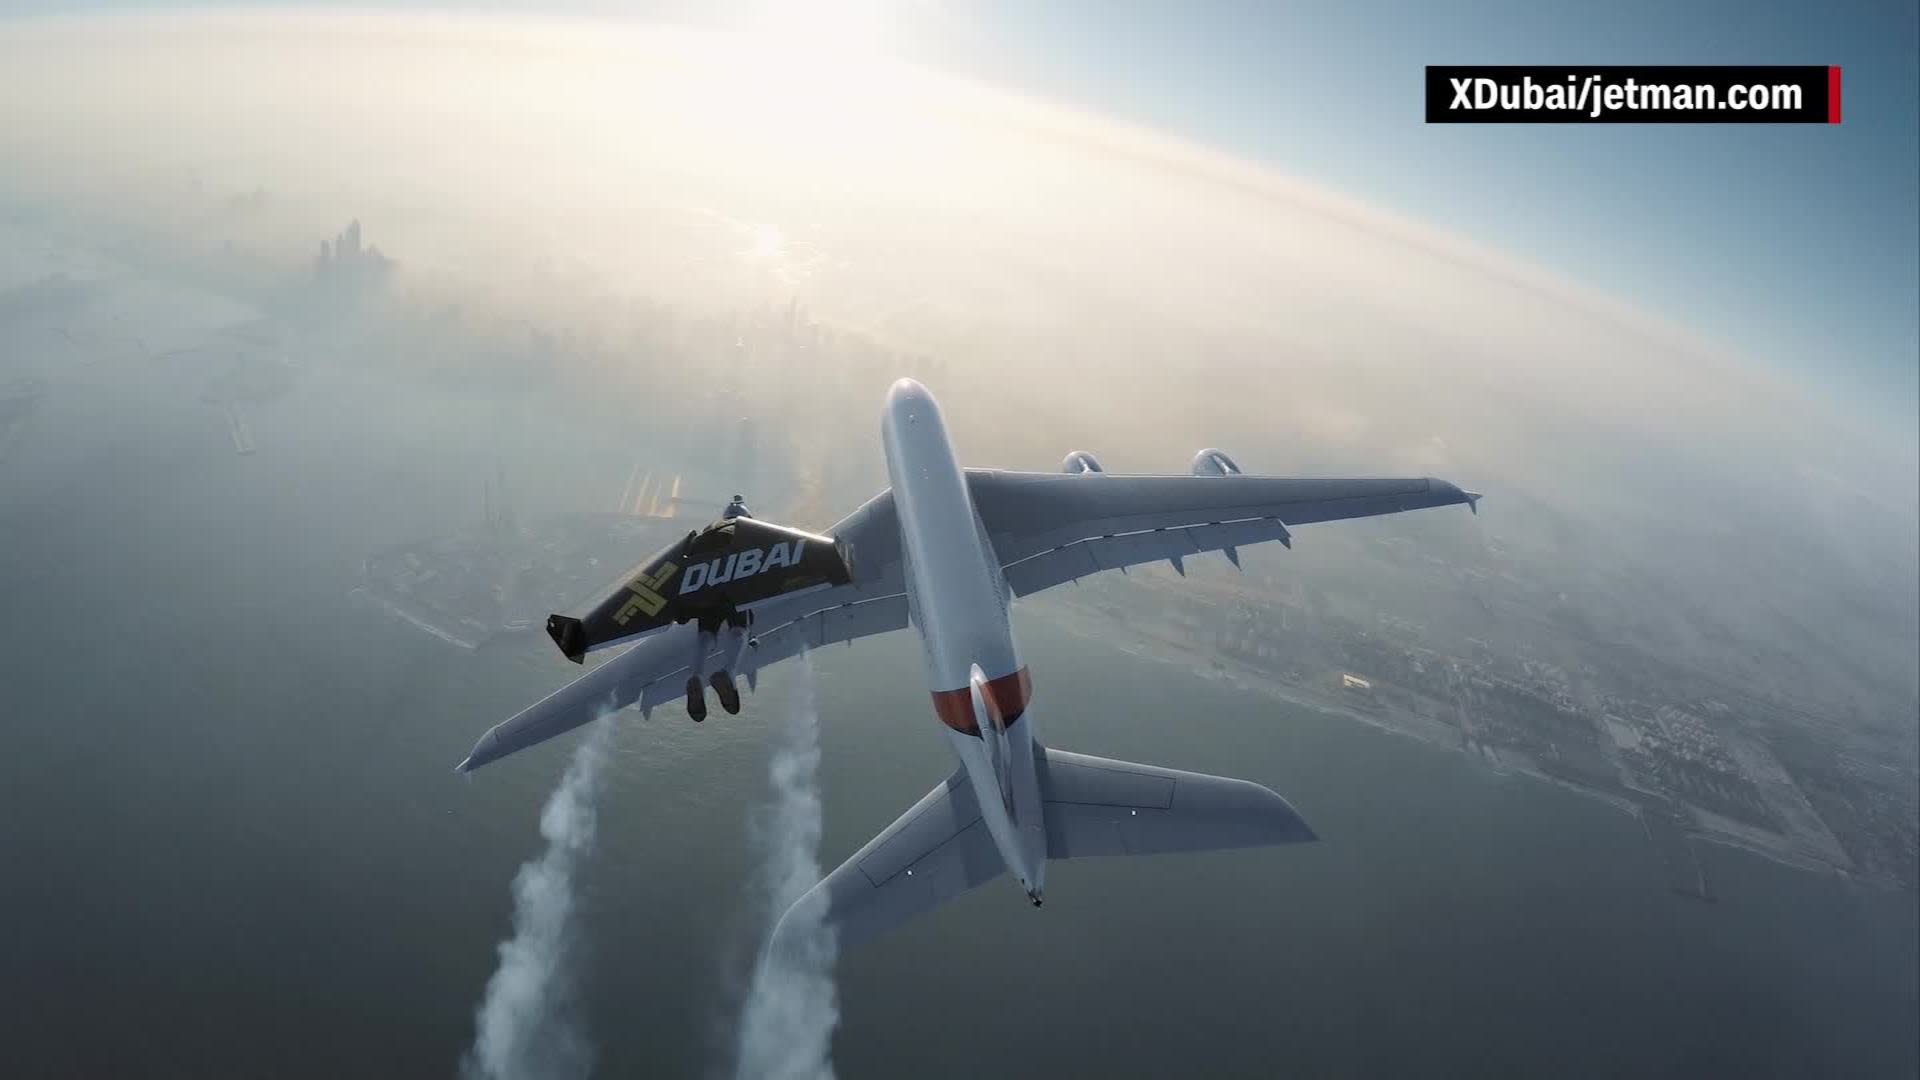 Watch Jetpack-Wearing Daredevils Zoom Past a Jumbo Jet (Video)